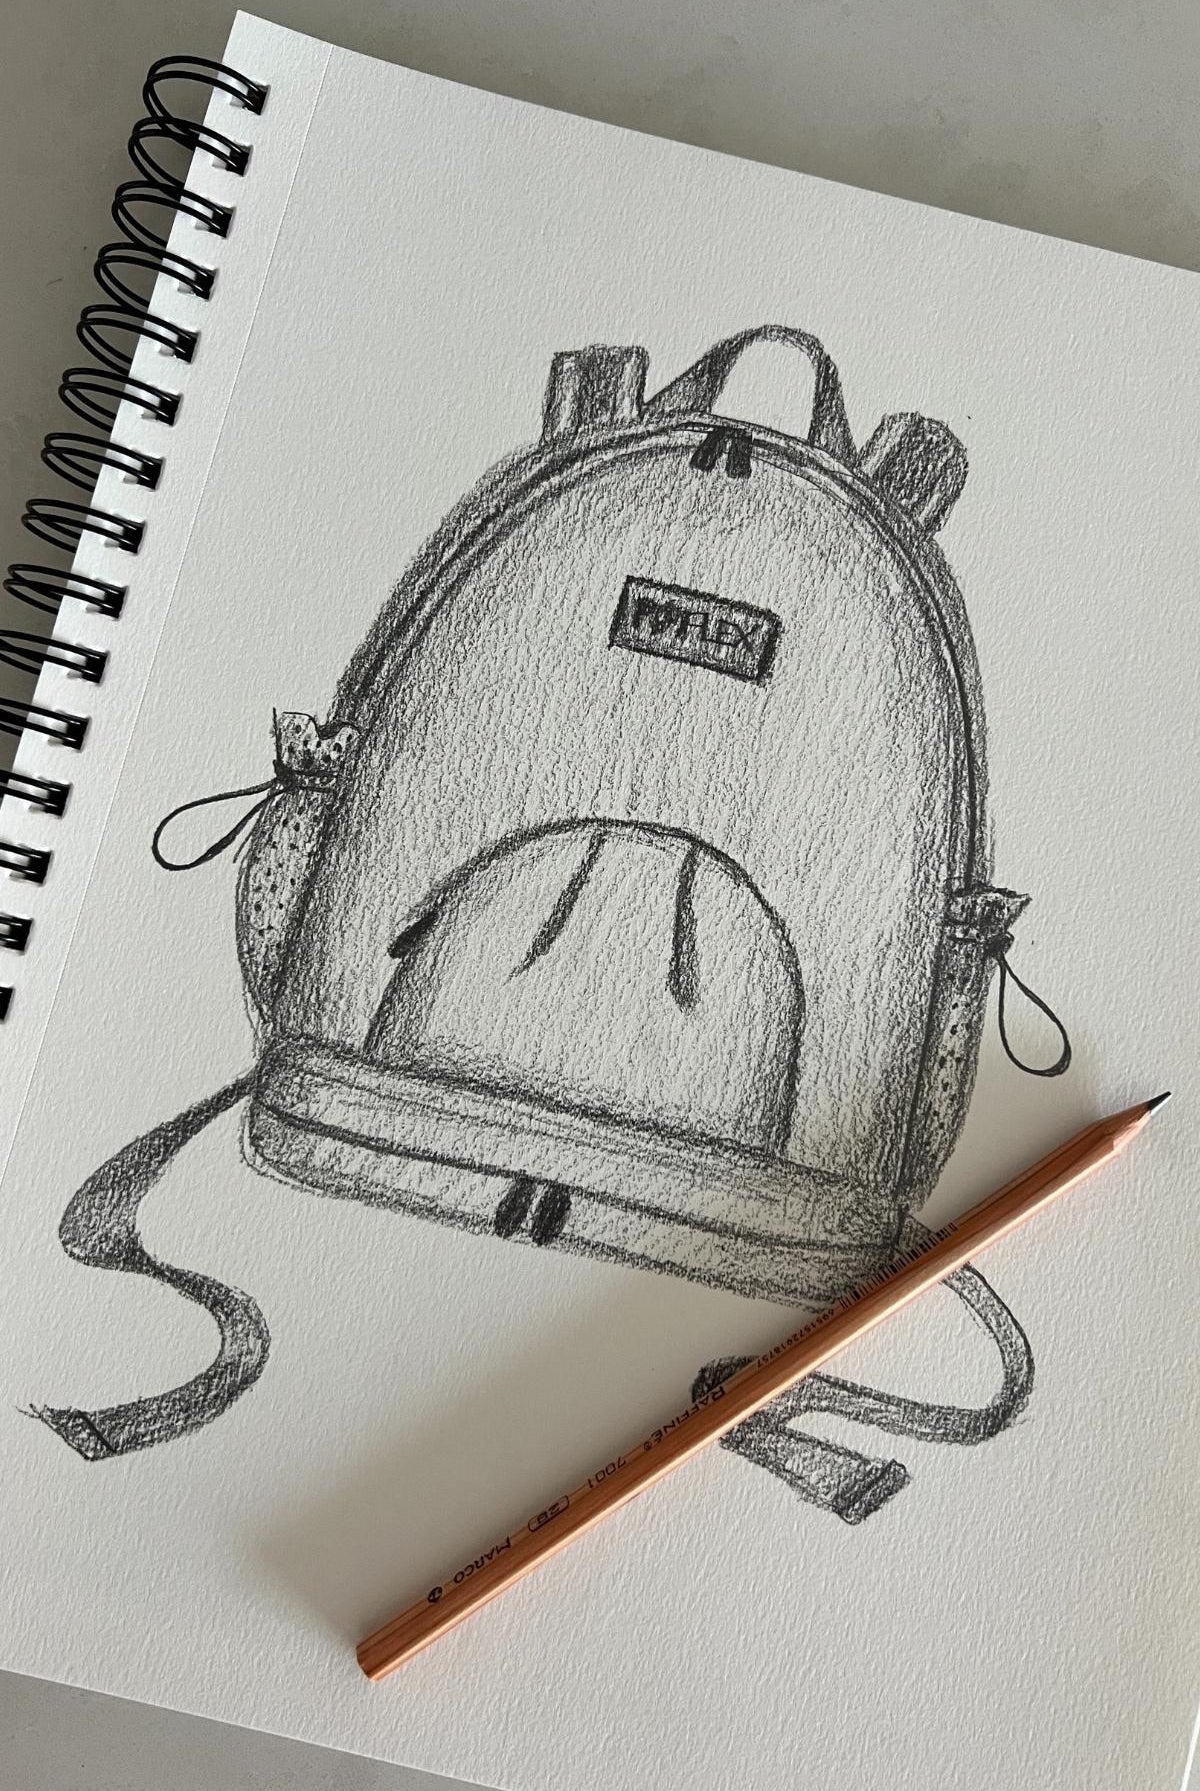 Cora backpack sketch popflex